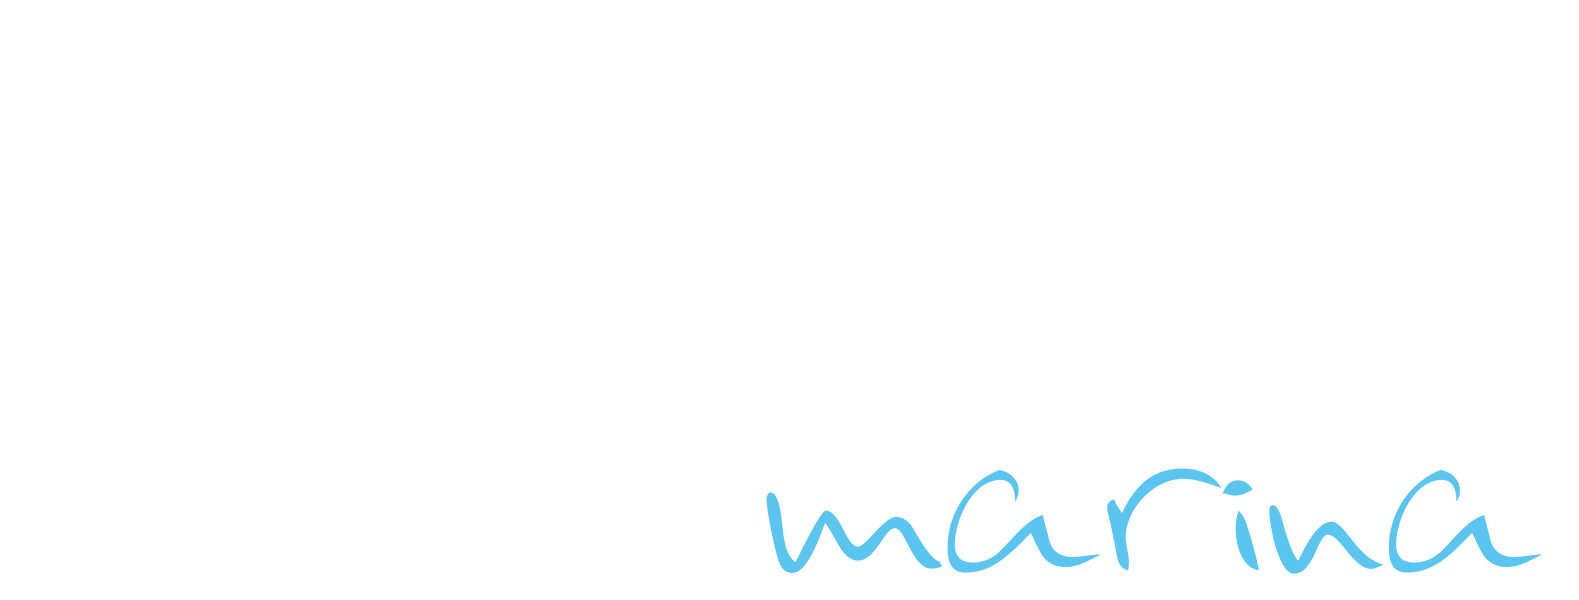 imperial wharf marina logo